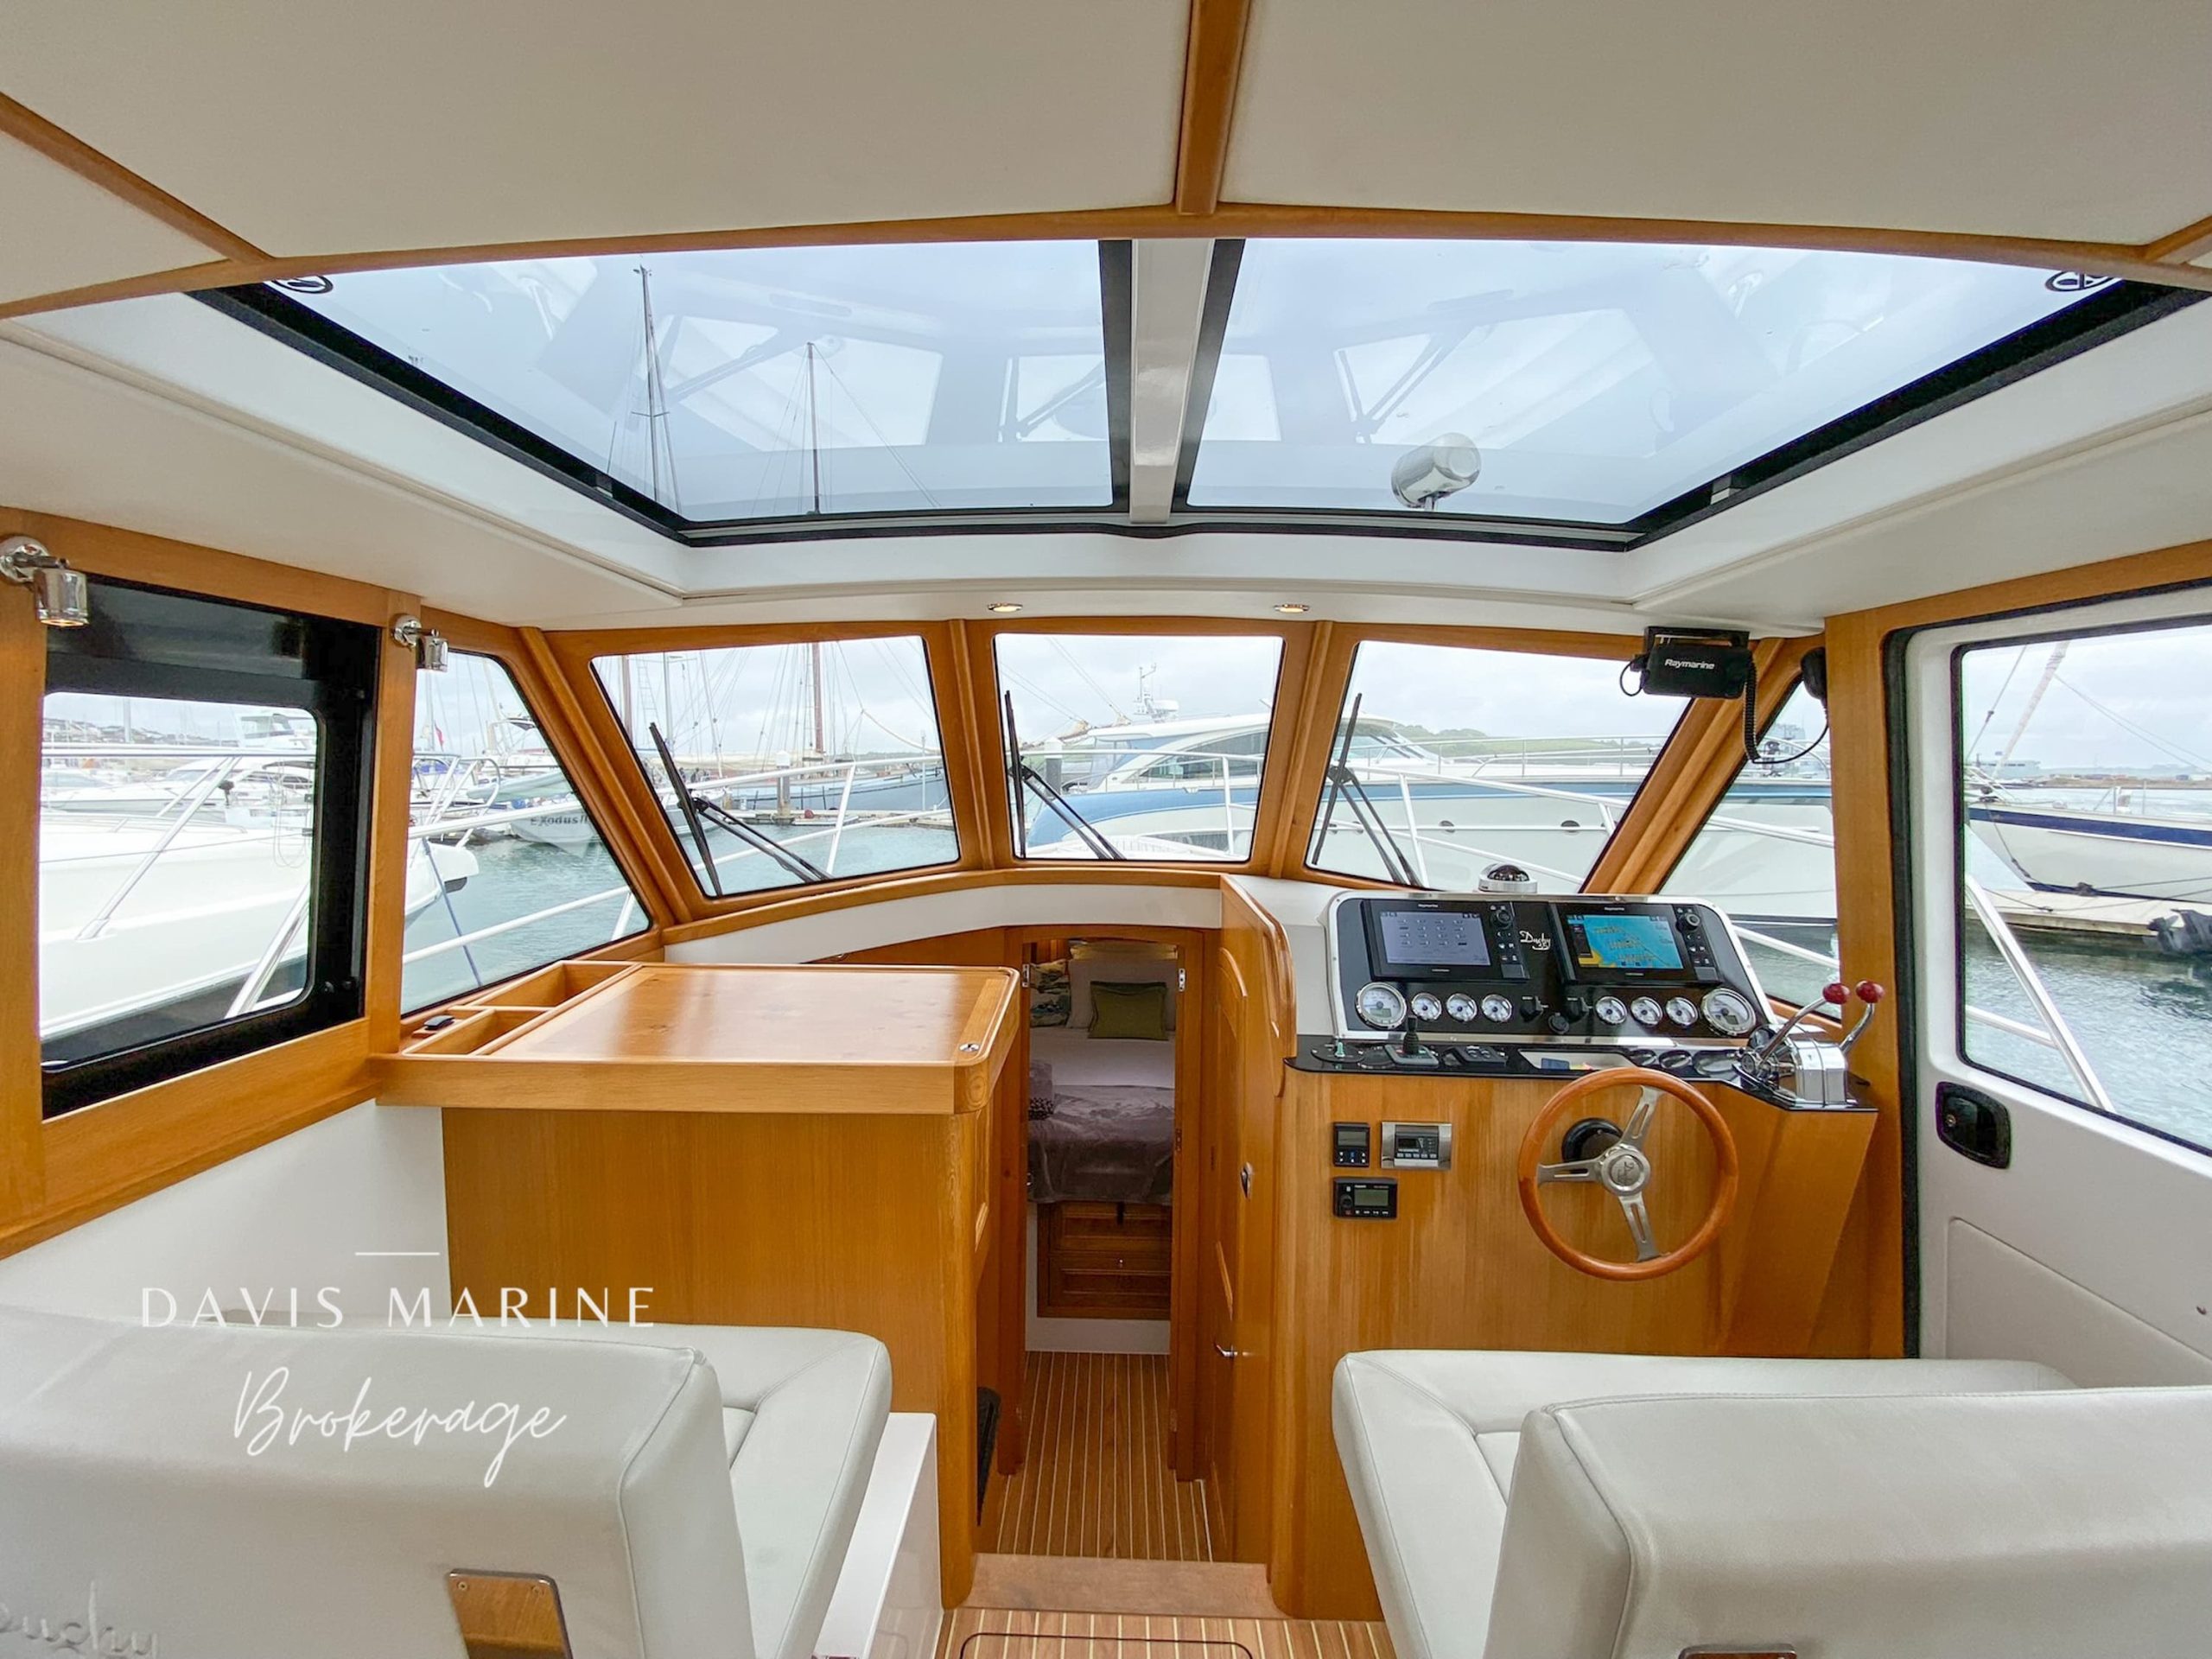 2020-Duchy-35-Boats-For-Sale-Sydney-Davis-Marine-Brokerage-20-scaled.jpg